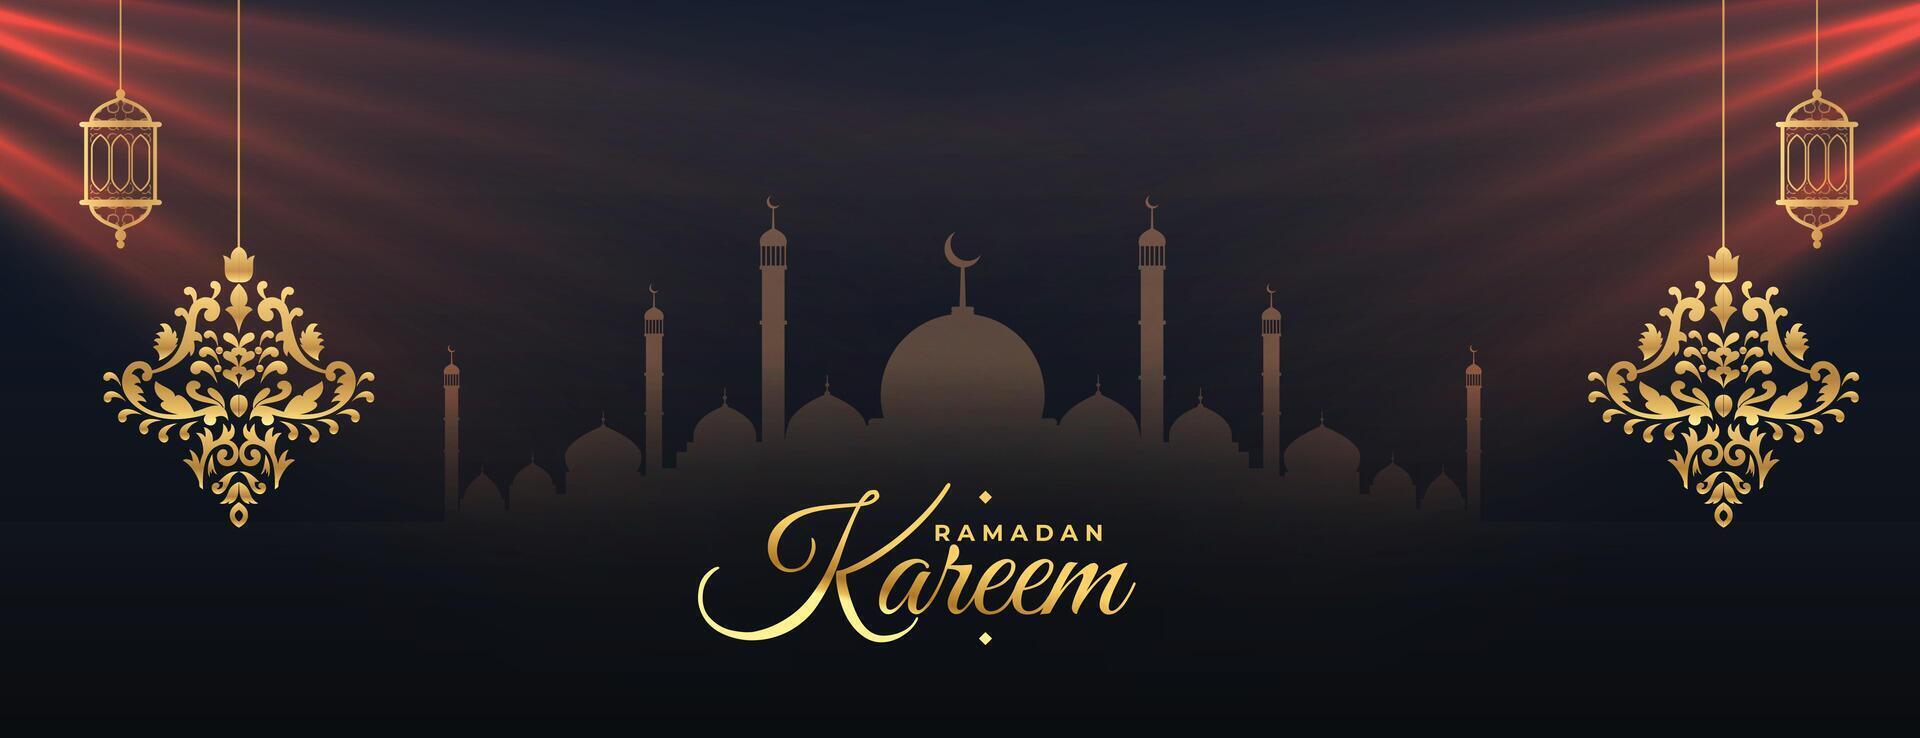 dekorativ gyllene ramadan kareem festival baner design vektor